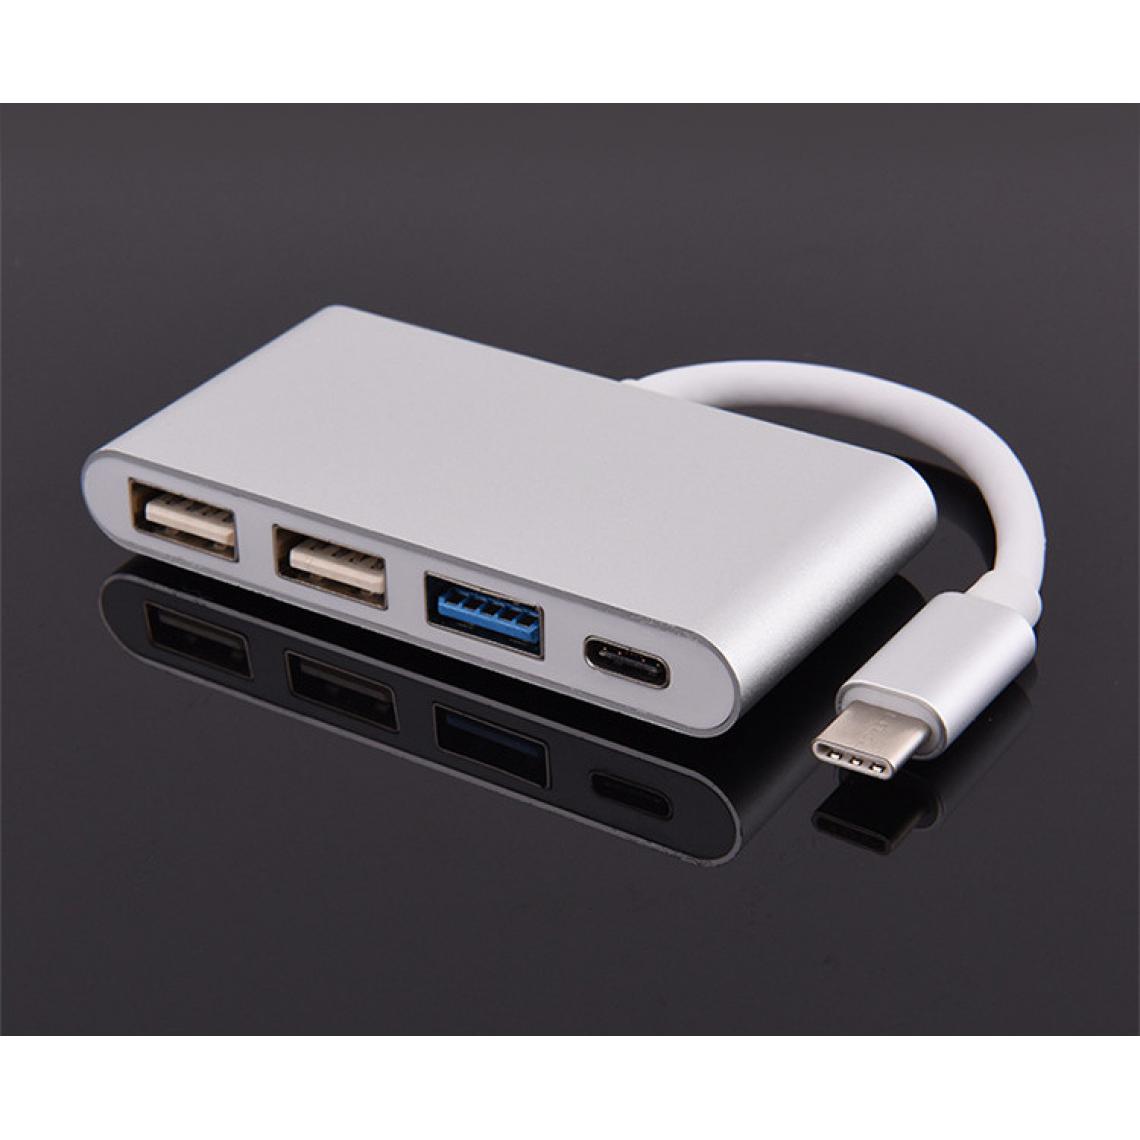 Shot - Multi Adaptateur 4 en 1 Type C pour LENOVO ZUK Z1 Smartphone Hub 2 ports USB 2.0 1 Port USB 3.0 (ARGENT) - Hub